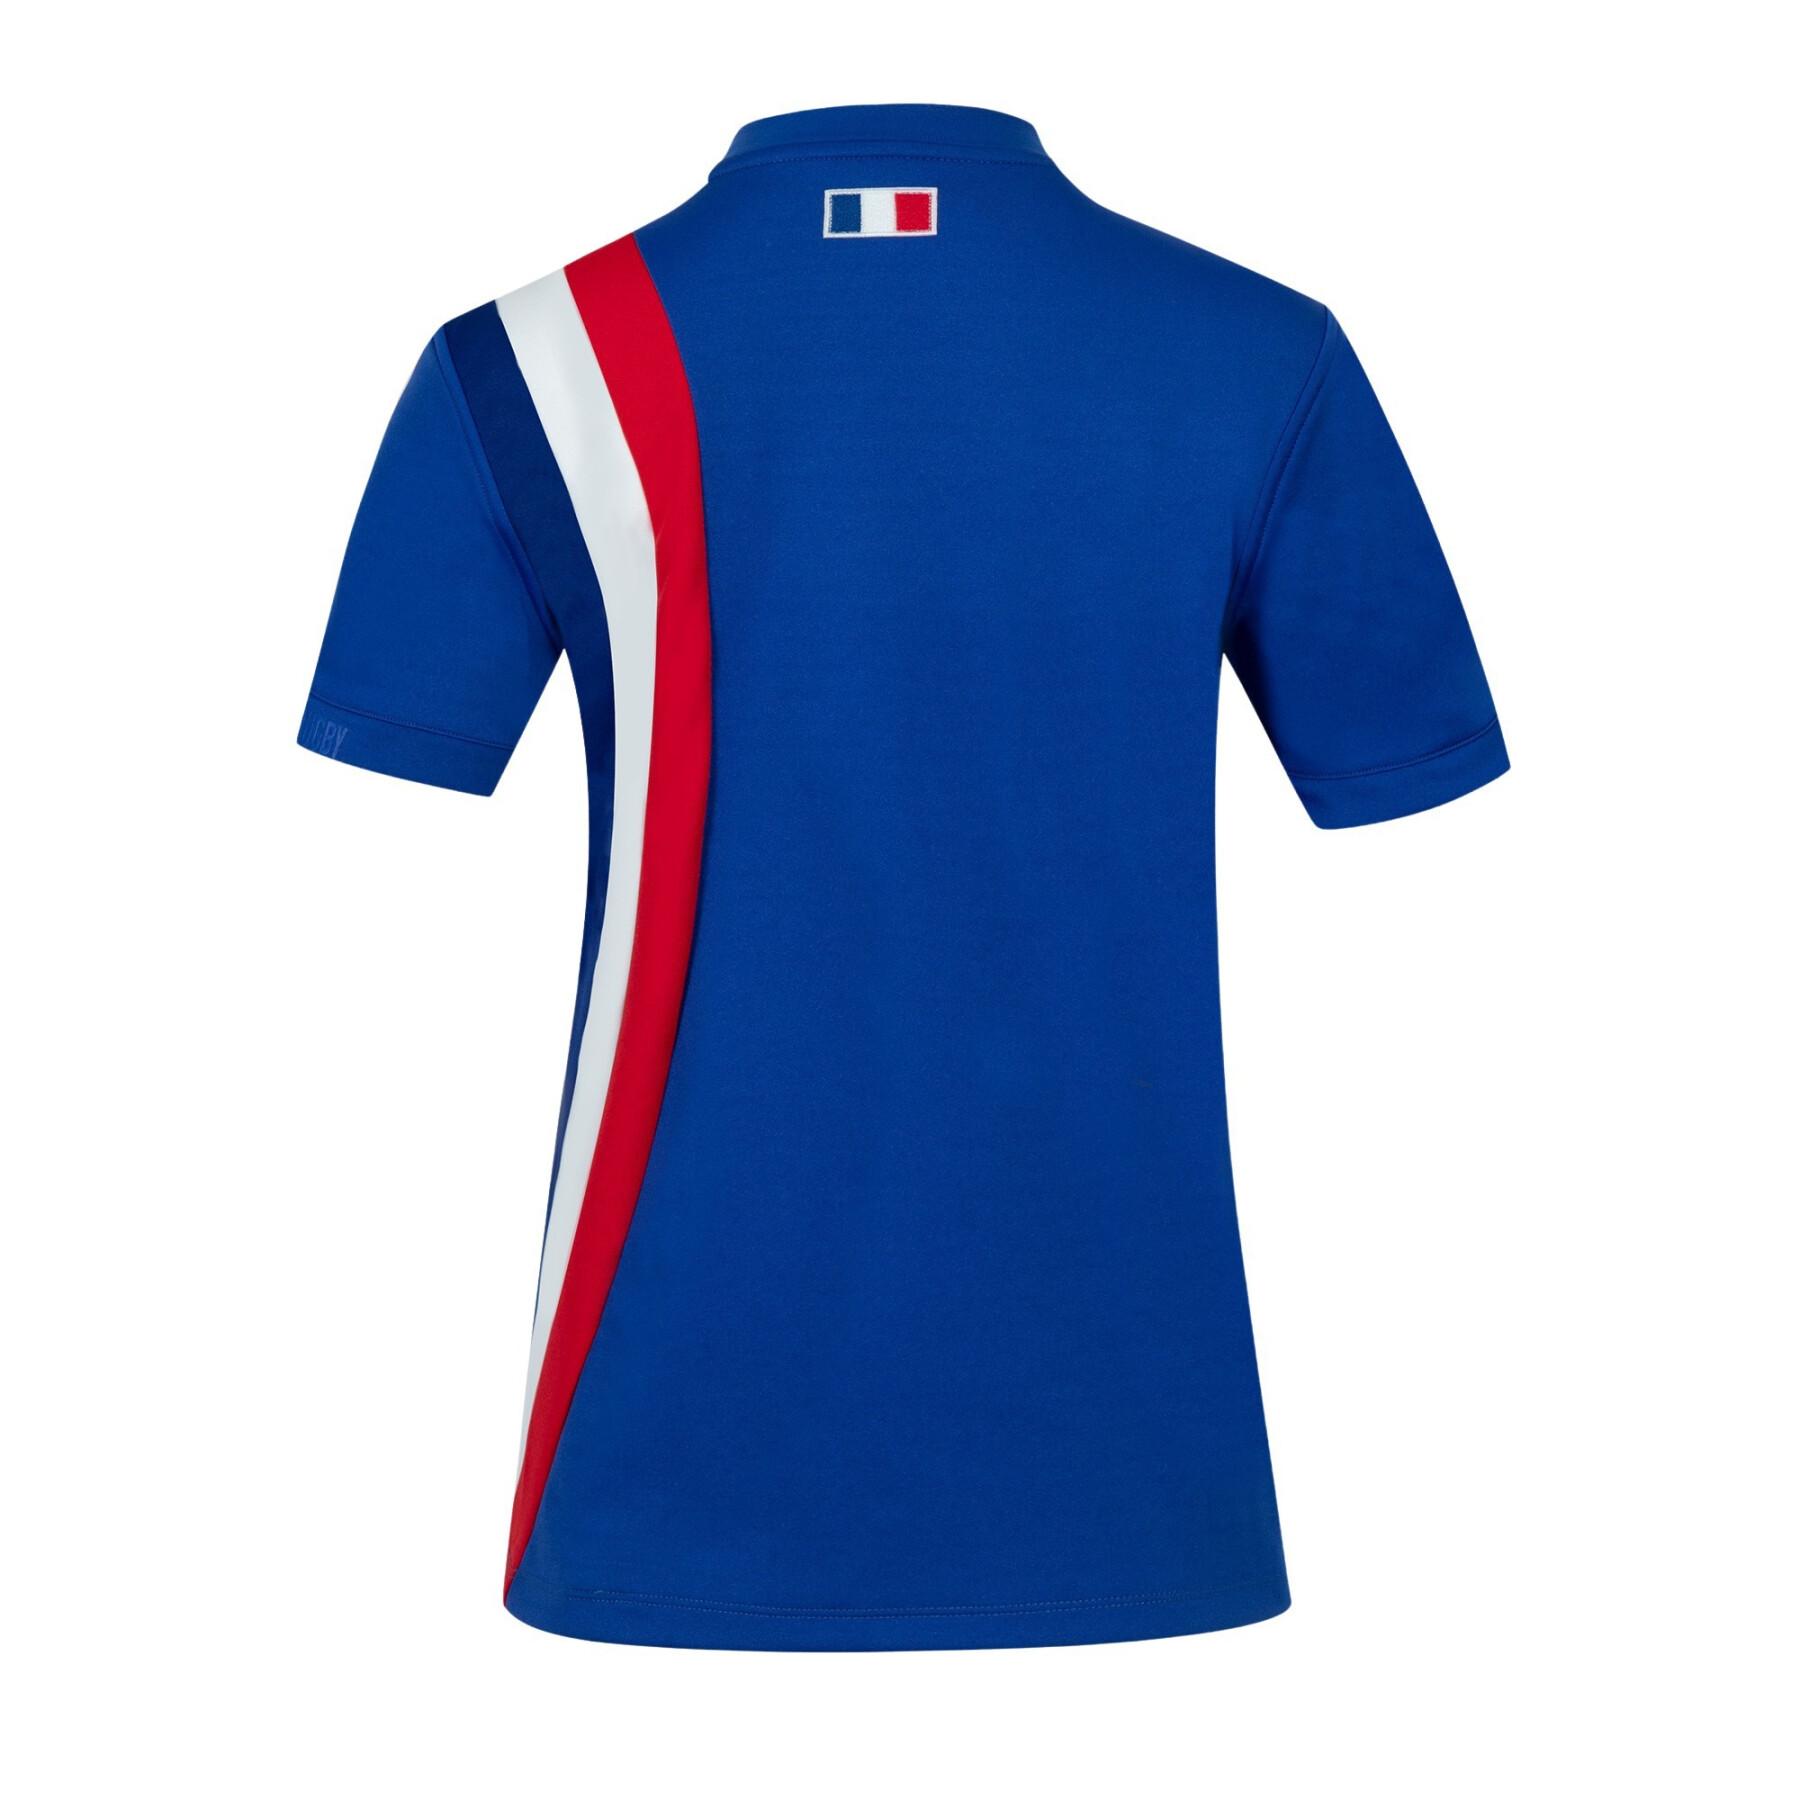 Woman's jersey xv de France 2021/22